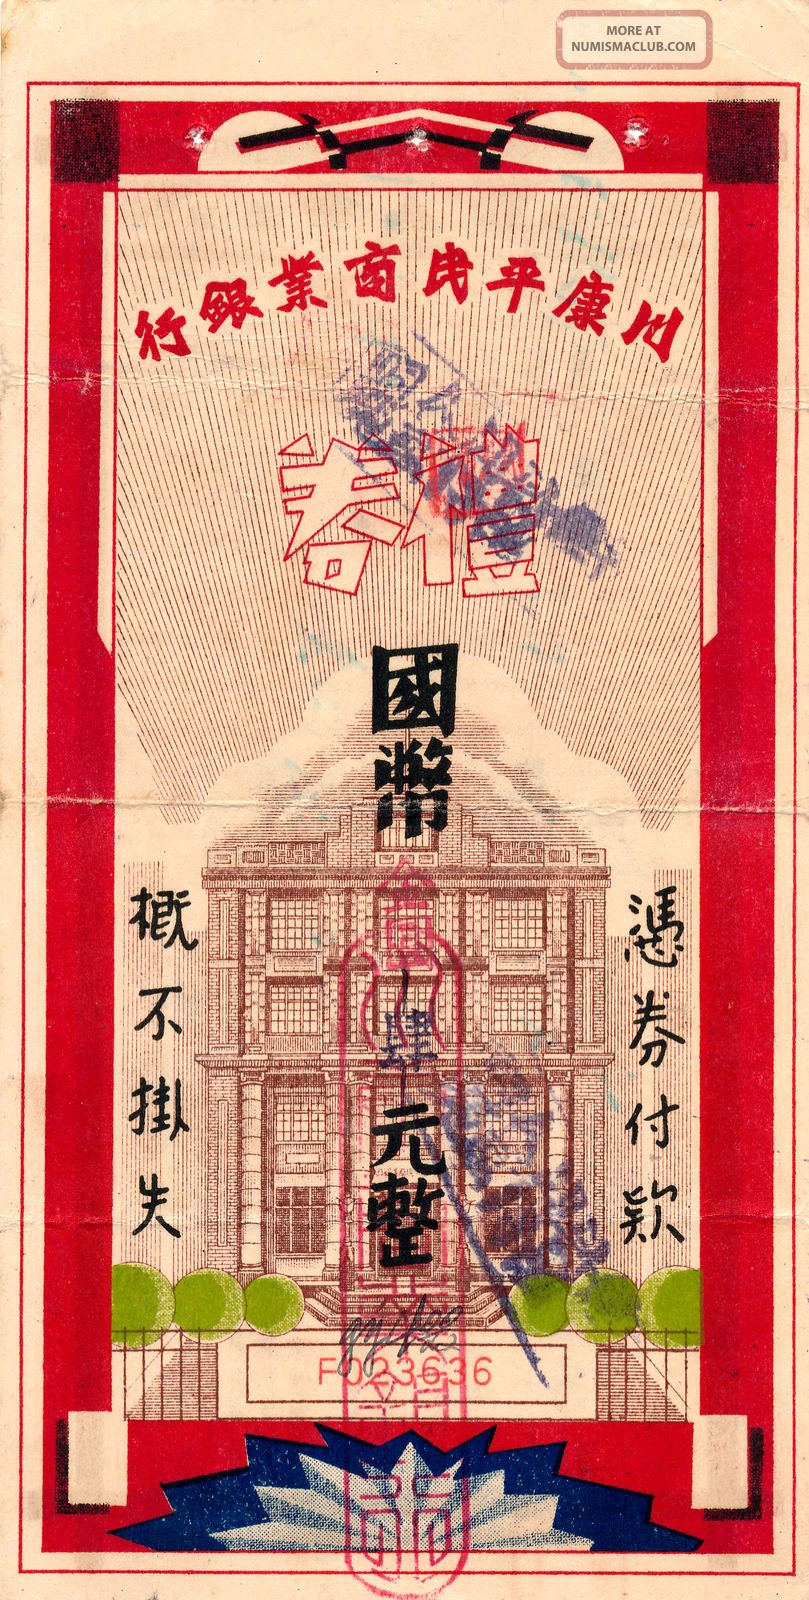 Cheun Hong Commercial Bank China 4 Yuan 1914 Cash Coupon Ef Asia photo